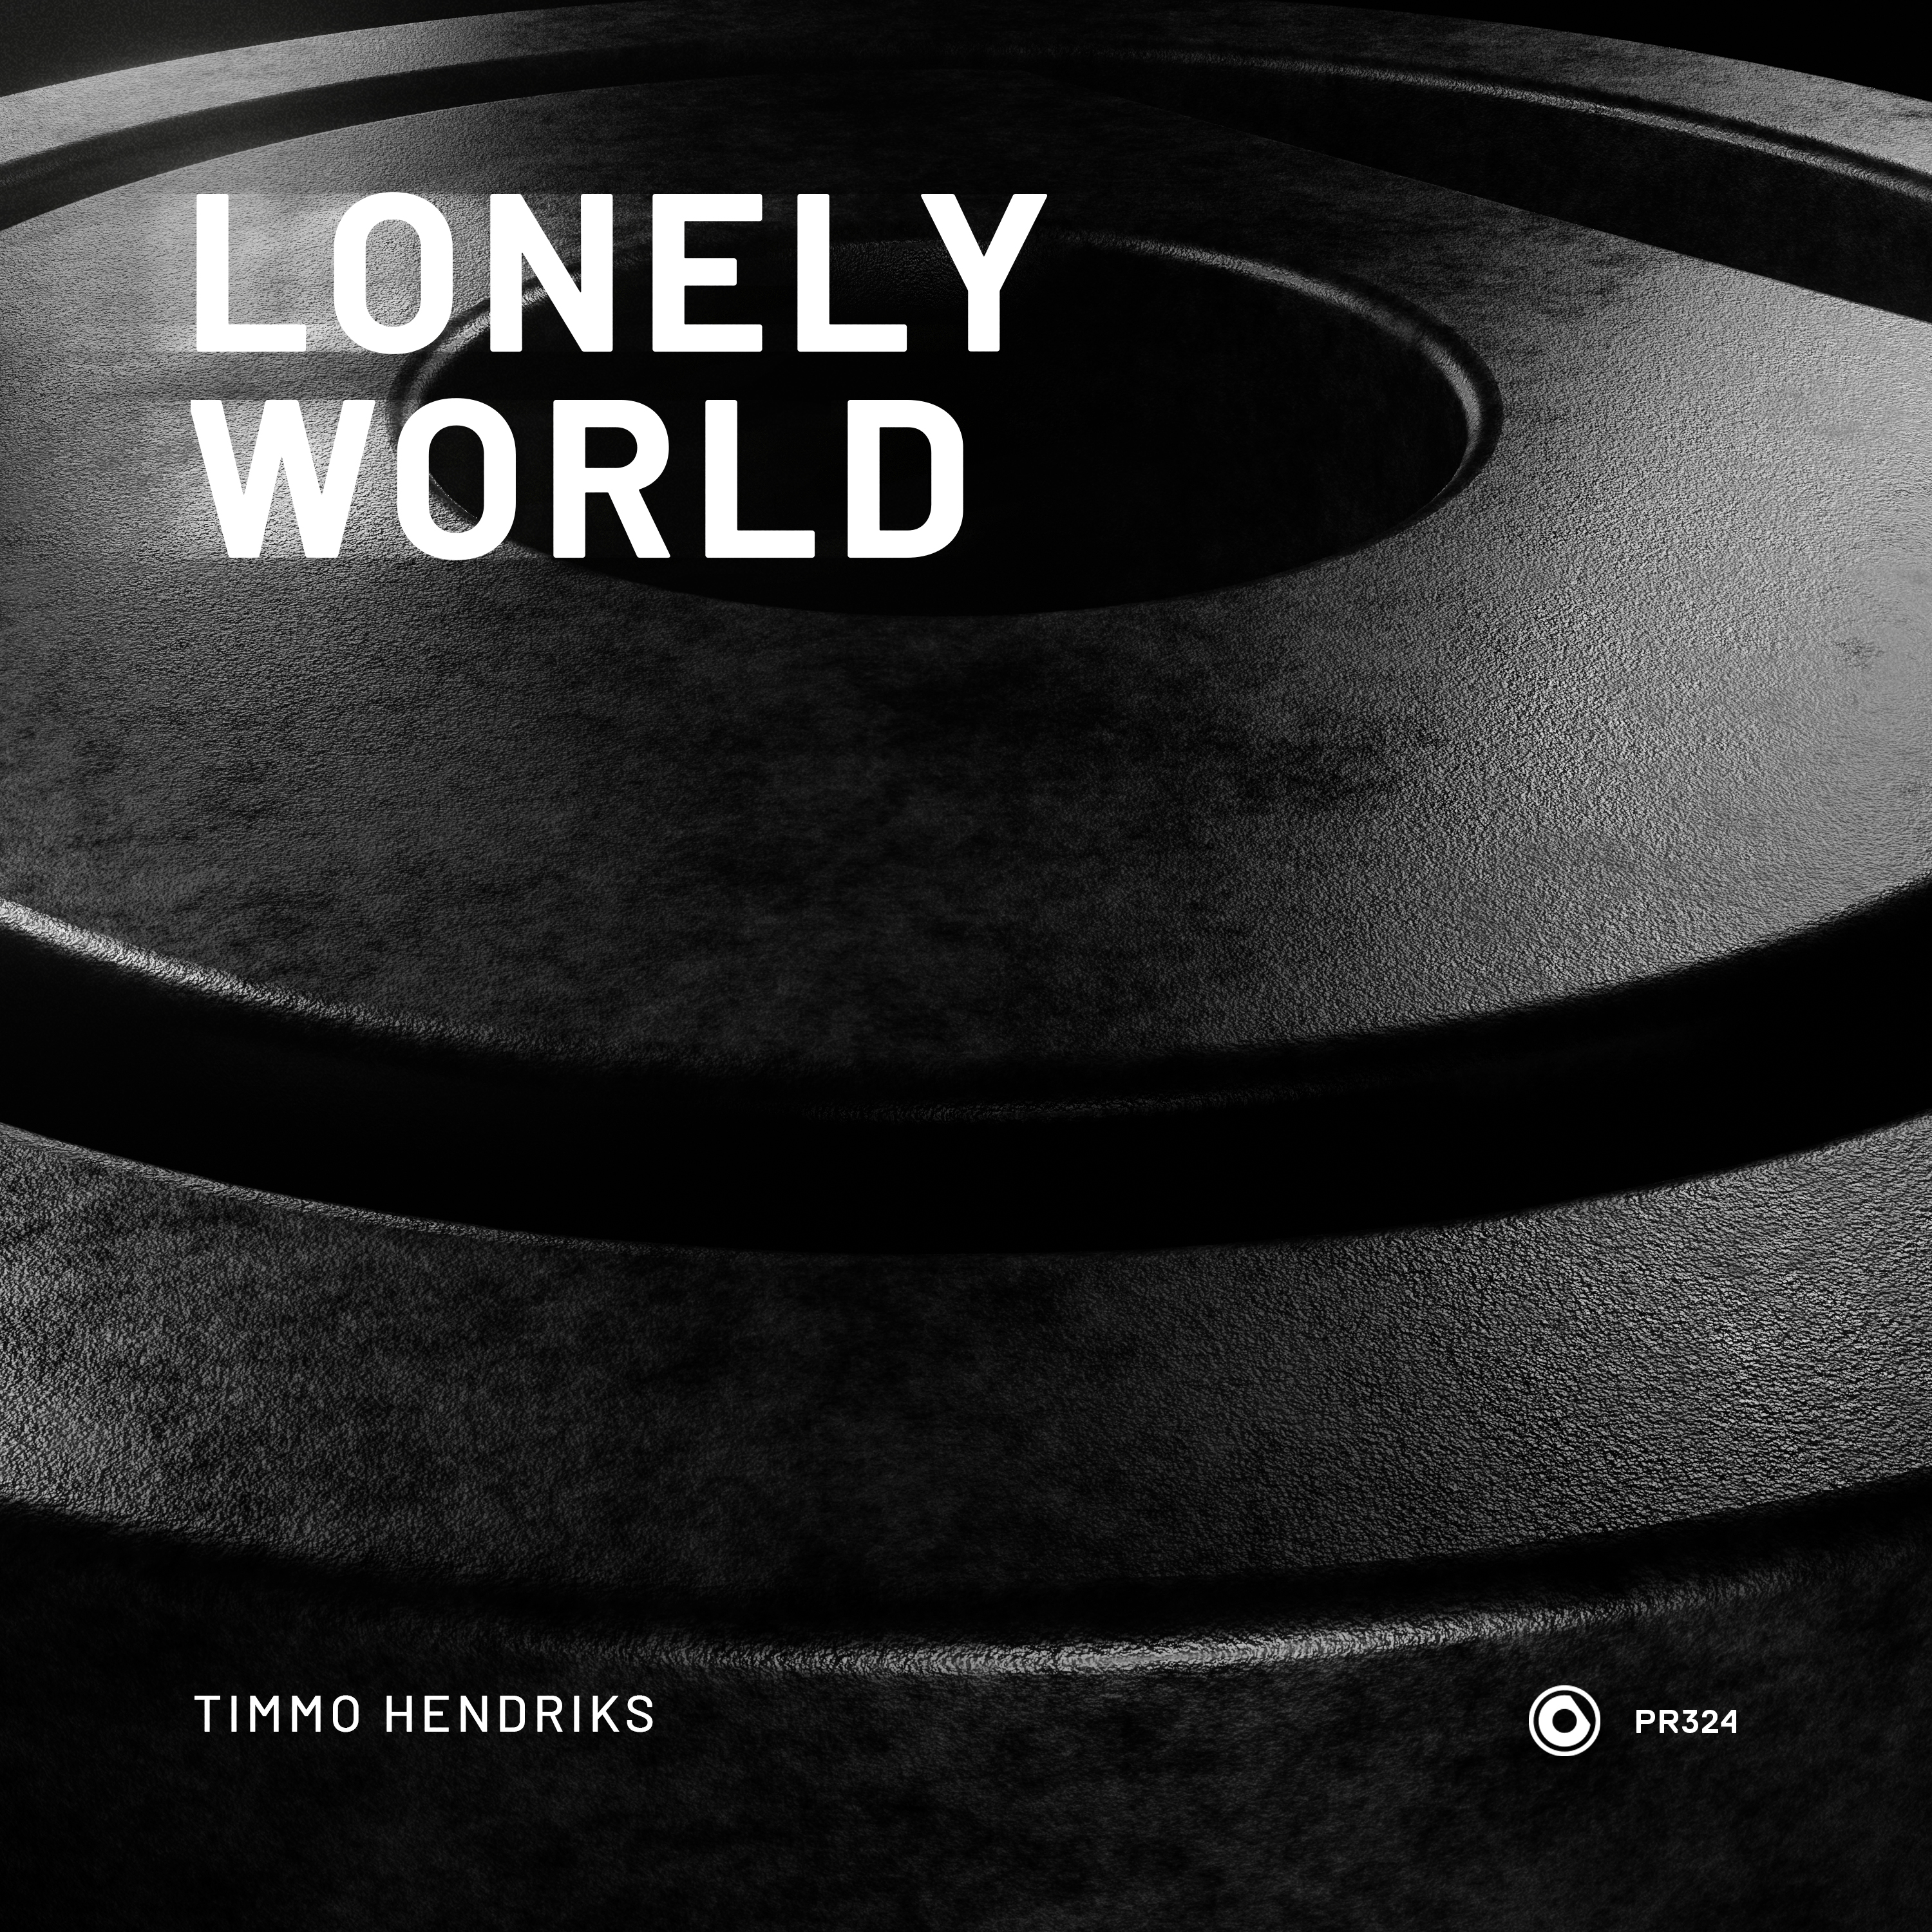  Timmo Hendriks nuevo track  “Lonely World”